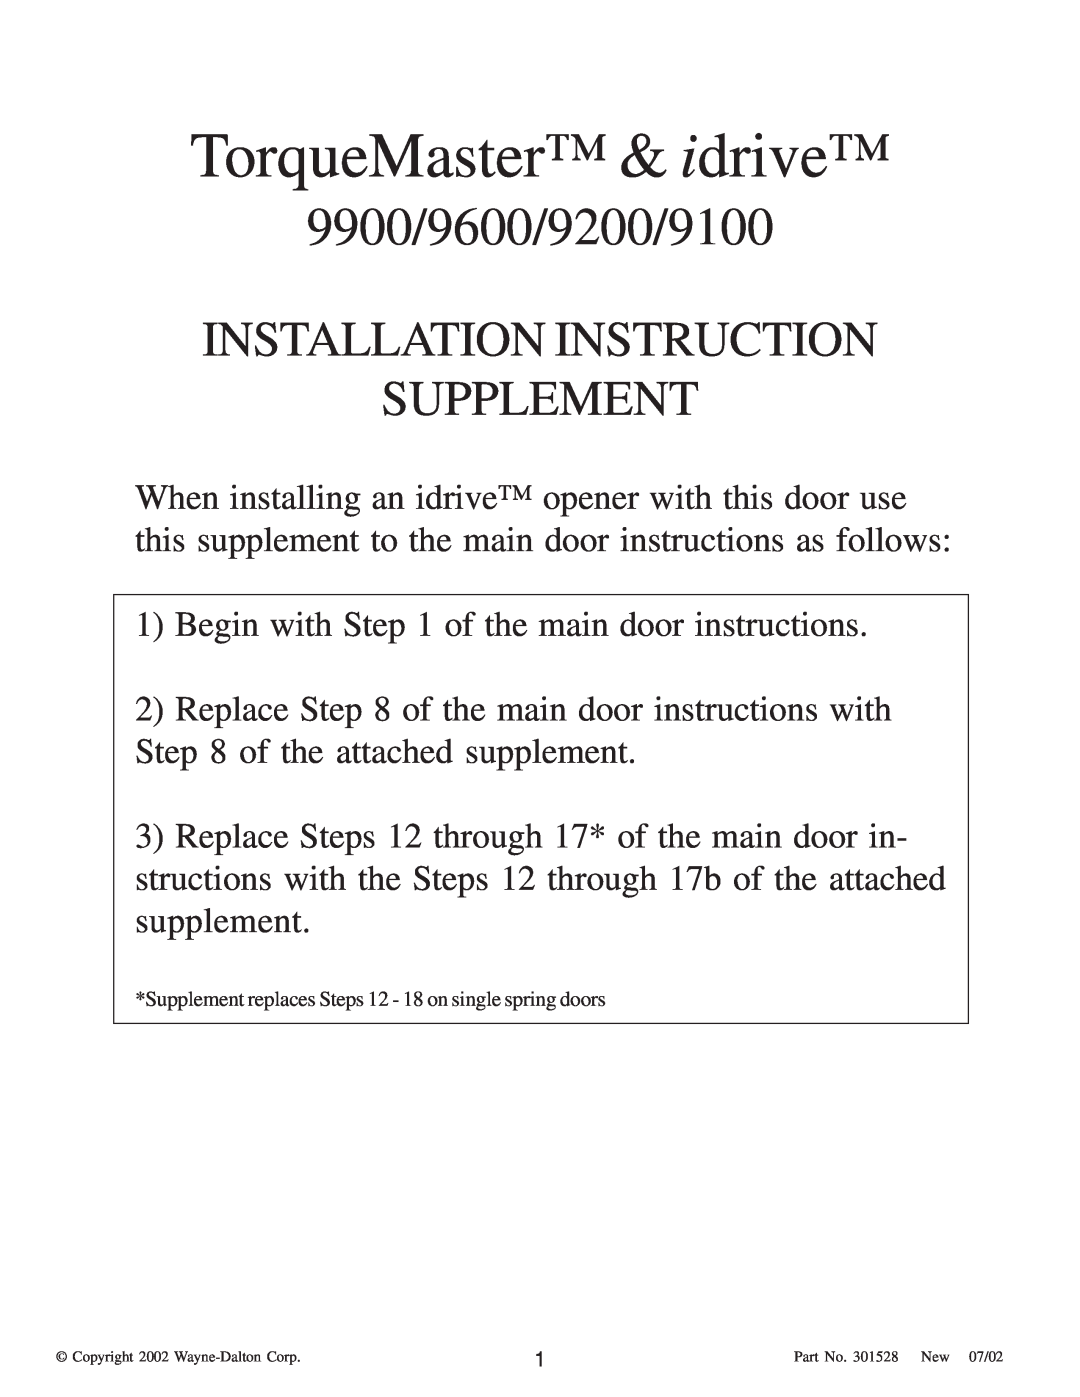 Wayne-Dalton installation instructions TorqueMaster & idrive, 9900/9600/9200/9100, Installation Instruction Supplement 